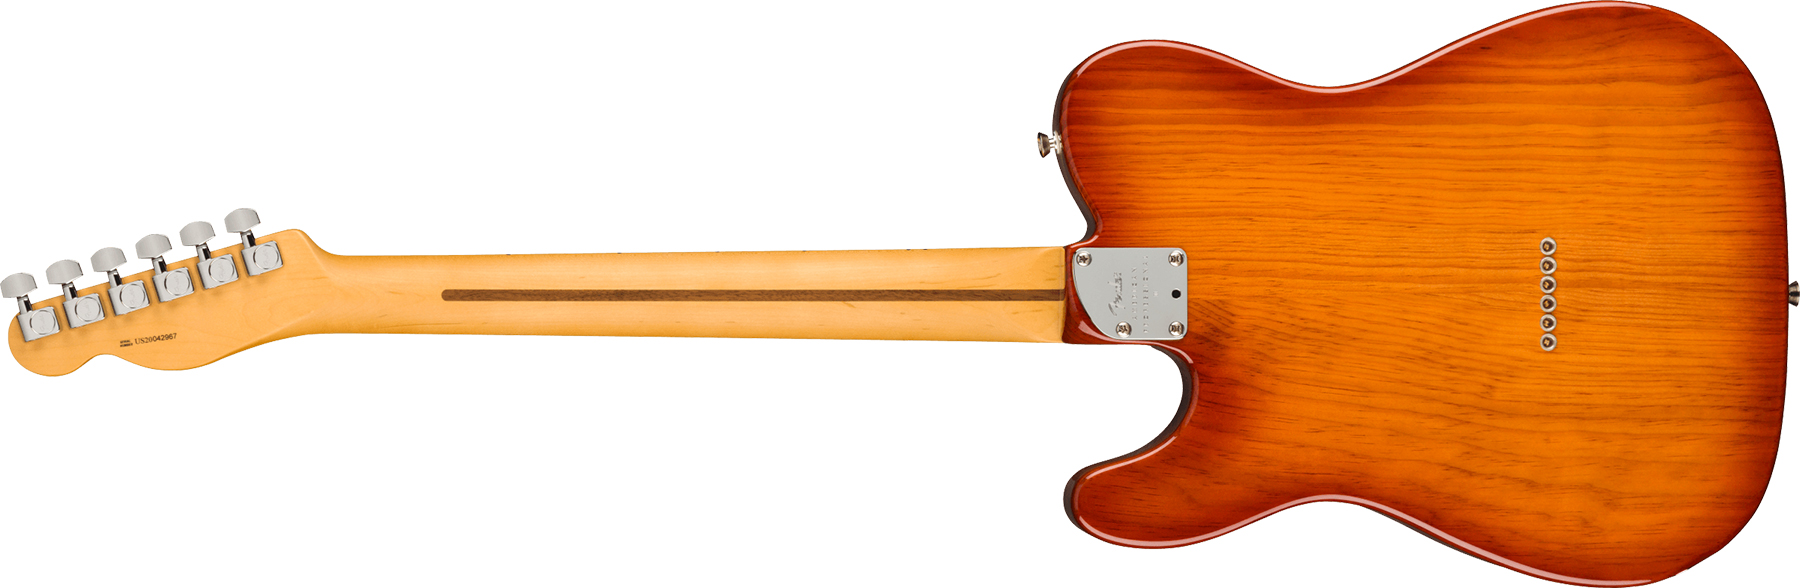 Fender Tele American Professional Ii Usa Mn - Sienna Sunburst - Guitarra eléctrica con forma de tel - Variation 1